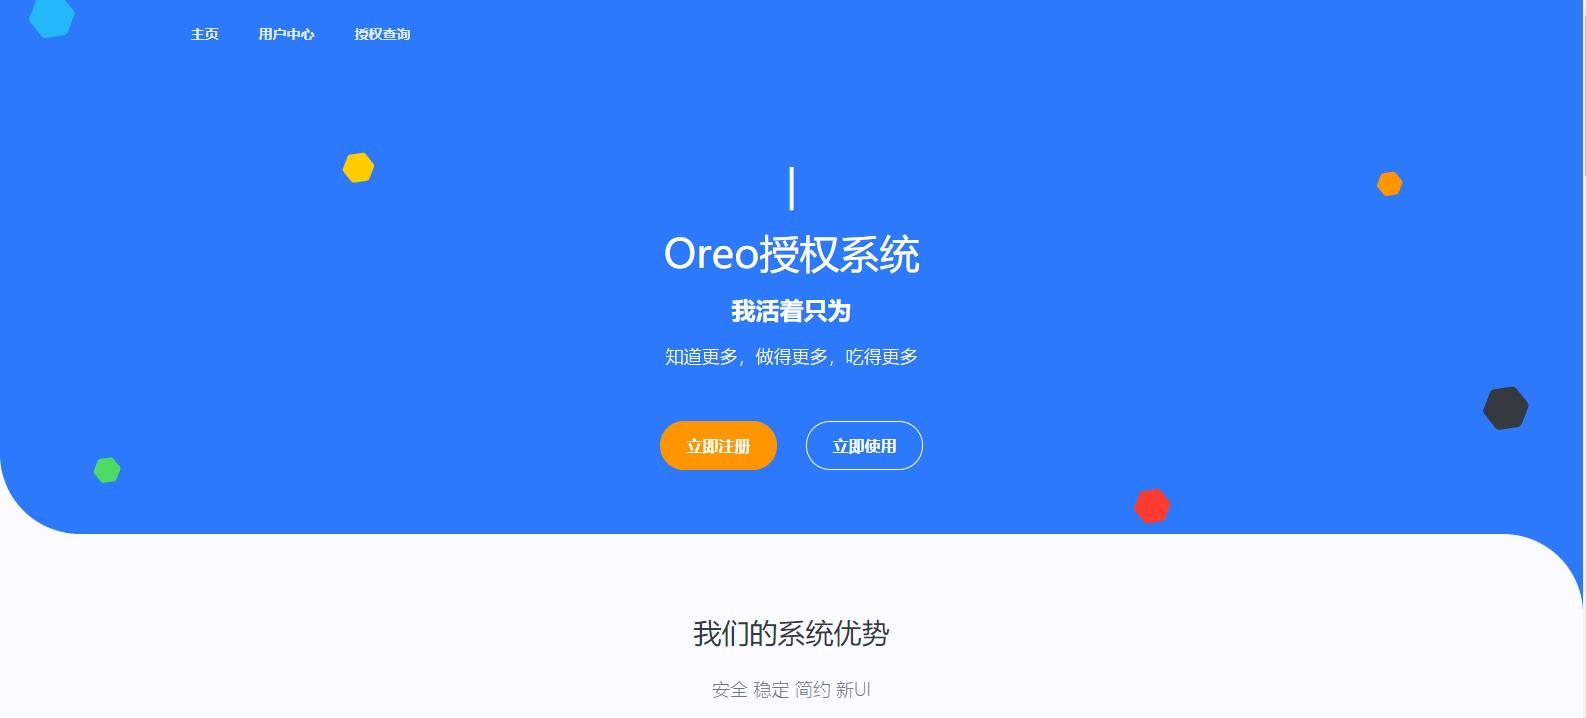 Oreo域名授权验证系统v1.0.6开源版本网站PHP源码